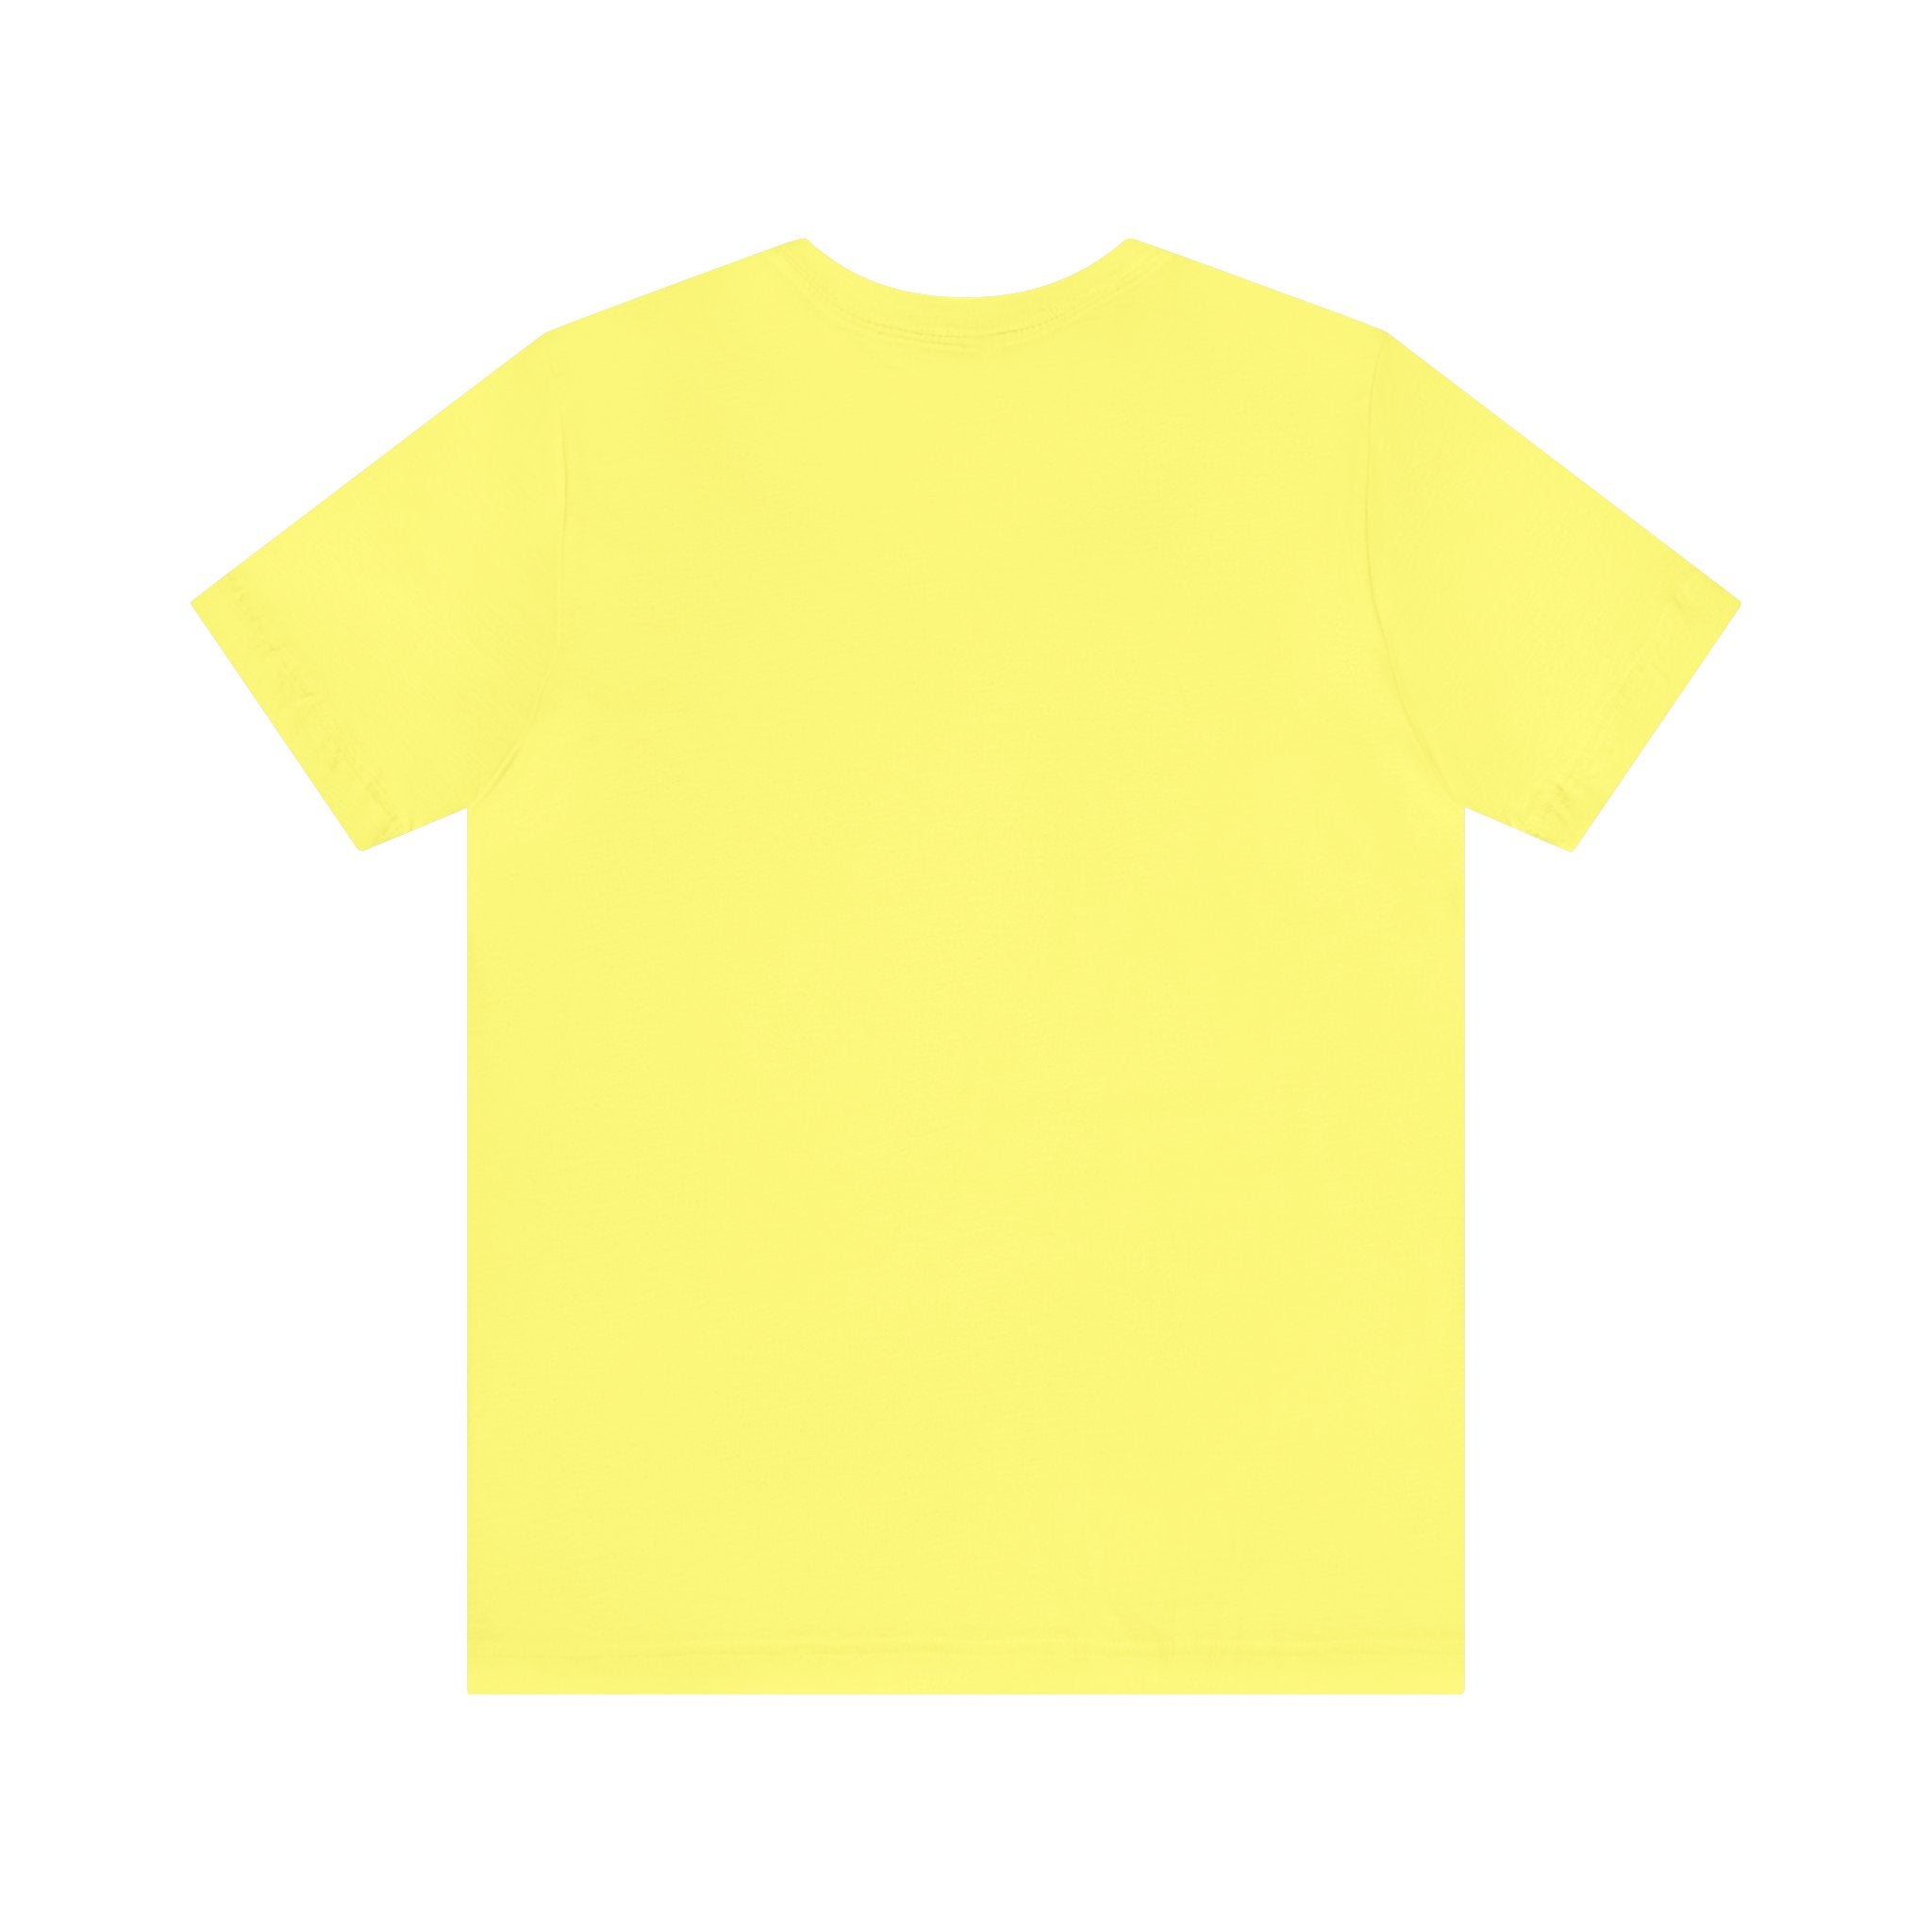 Light Unisex PLAY T-Shirts